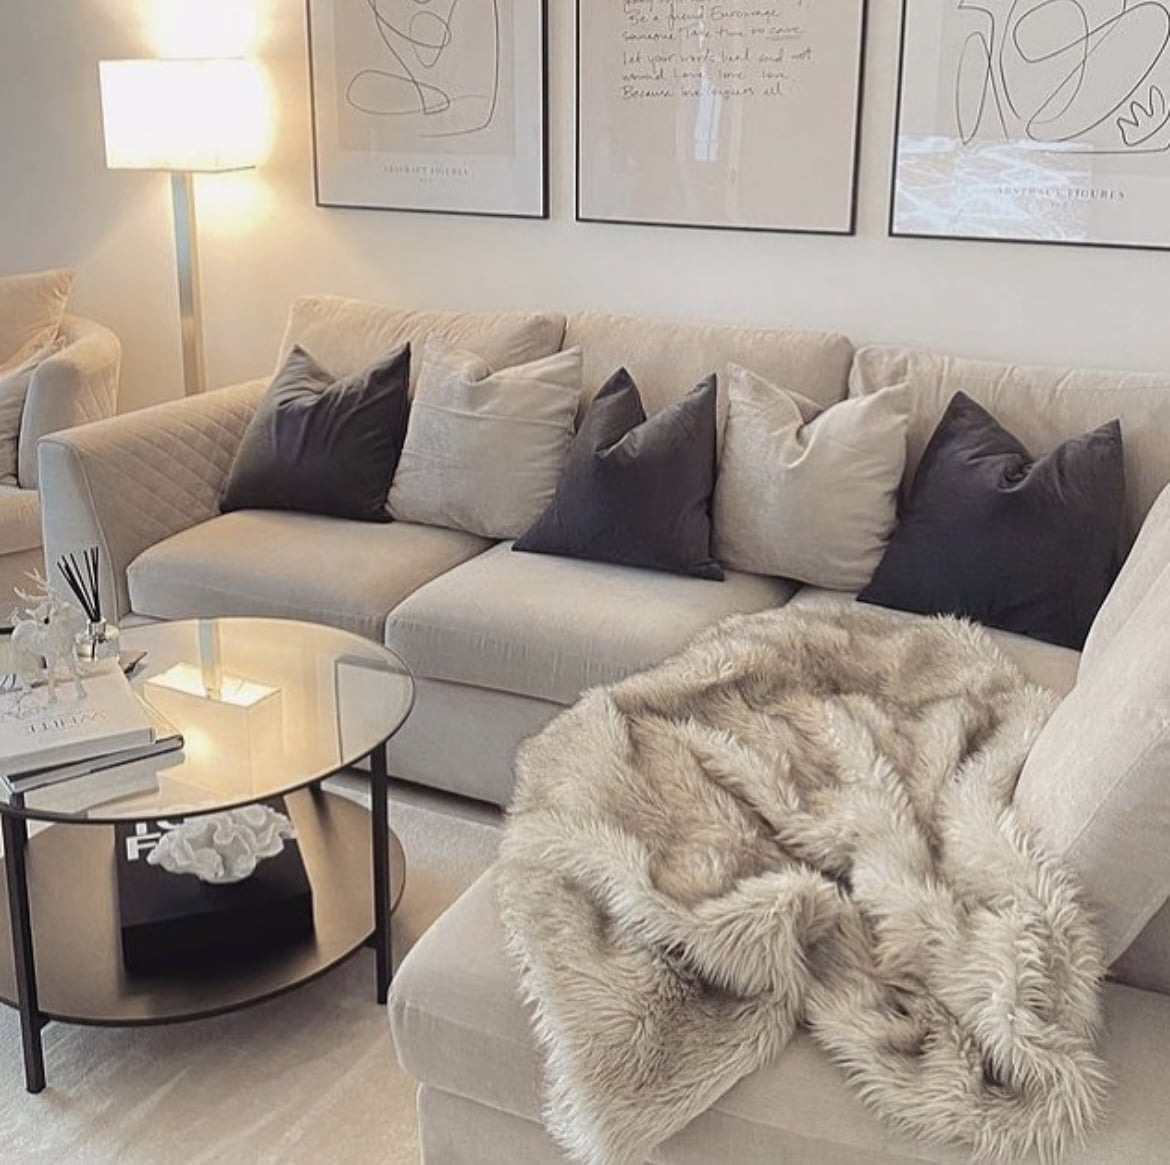 15 Beige and Black Living Room Ideas For An Elegant Contrast - Sleek ...